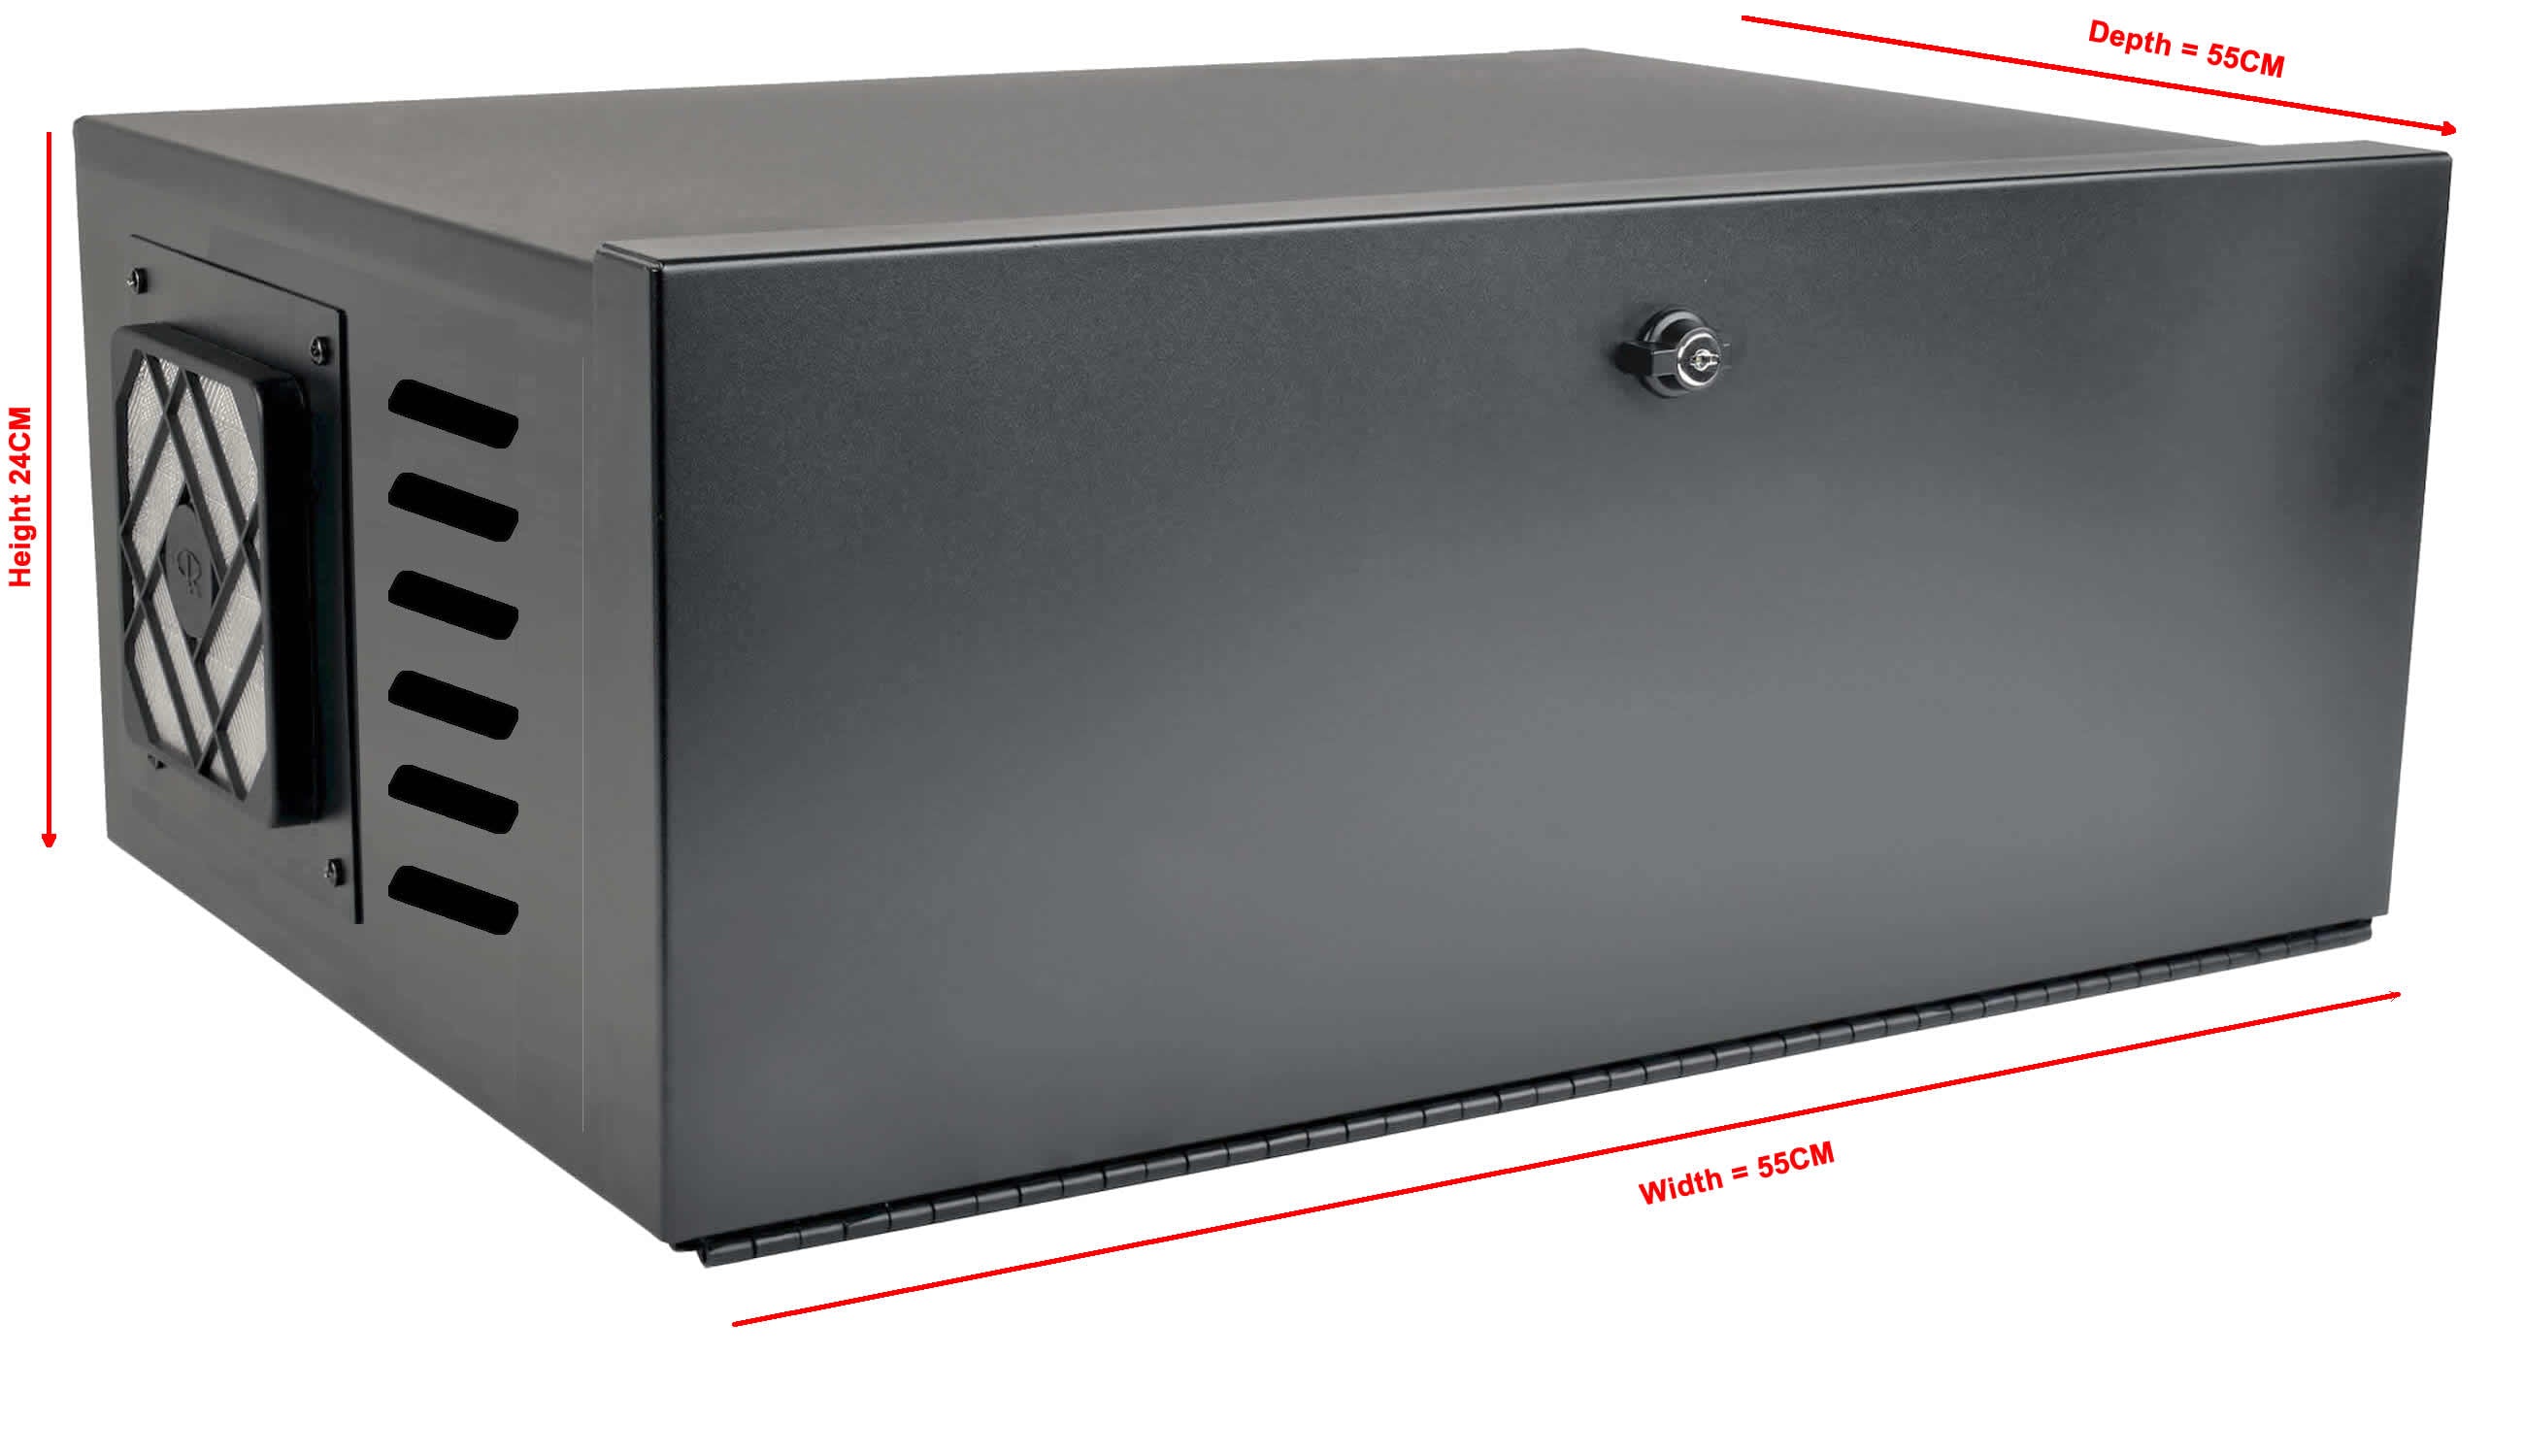 07-6601-55 19" Security Lock Box for NVRs & DVRs - 55cm Depth